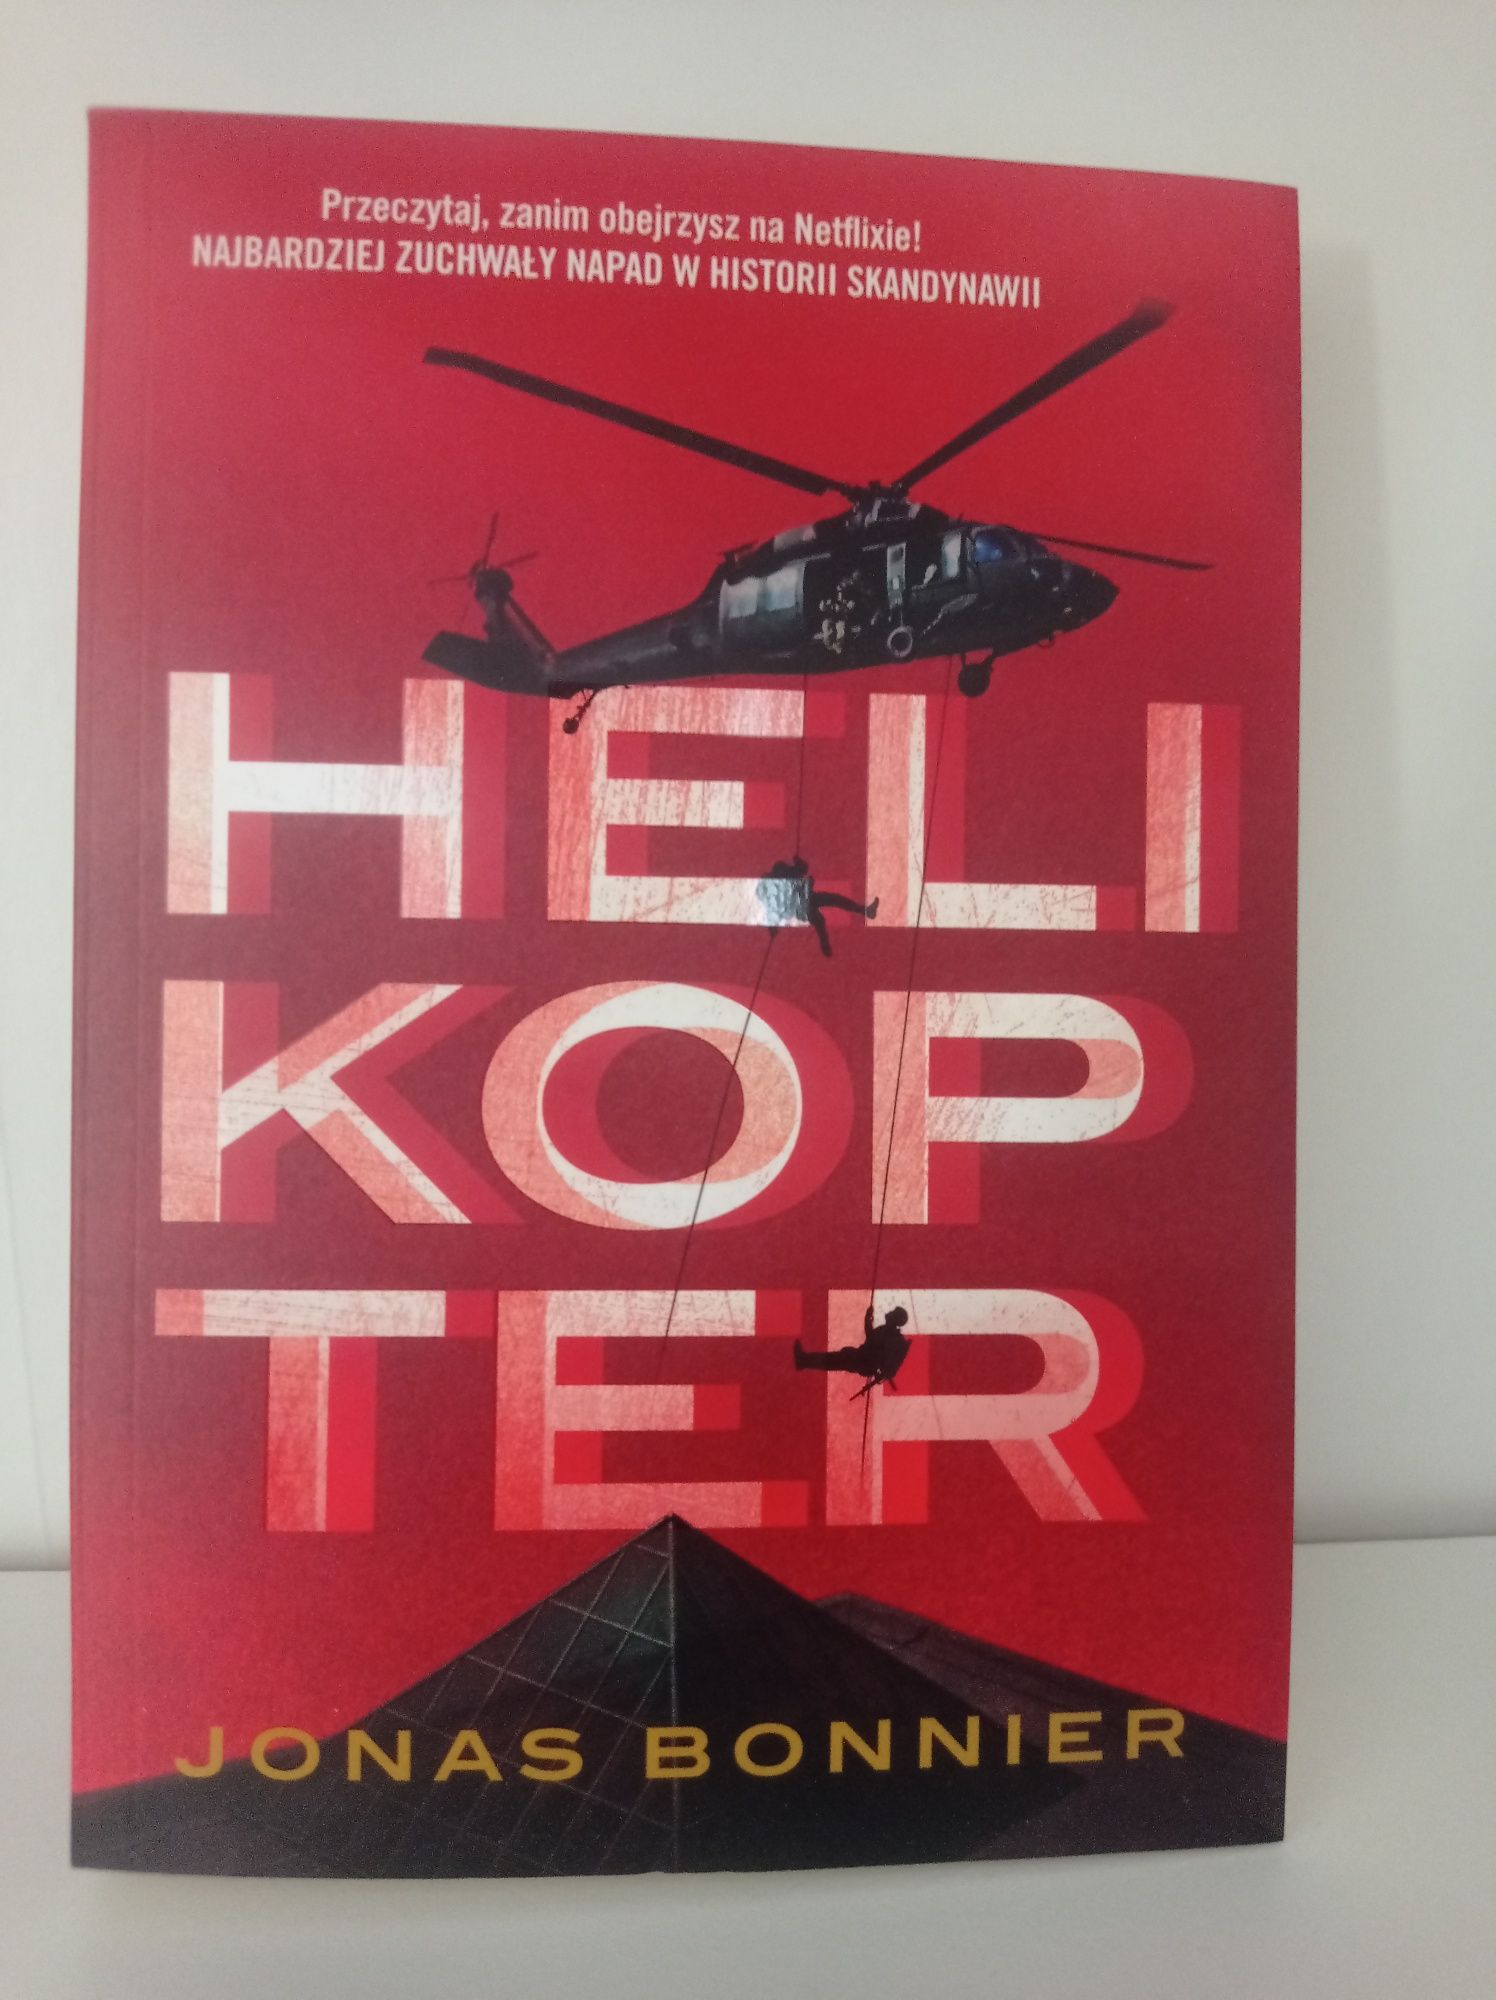 Jonas Bonnier - Helikopter